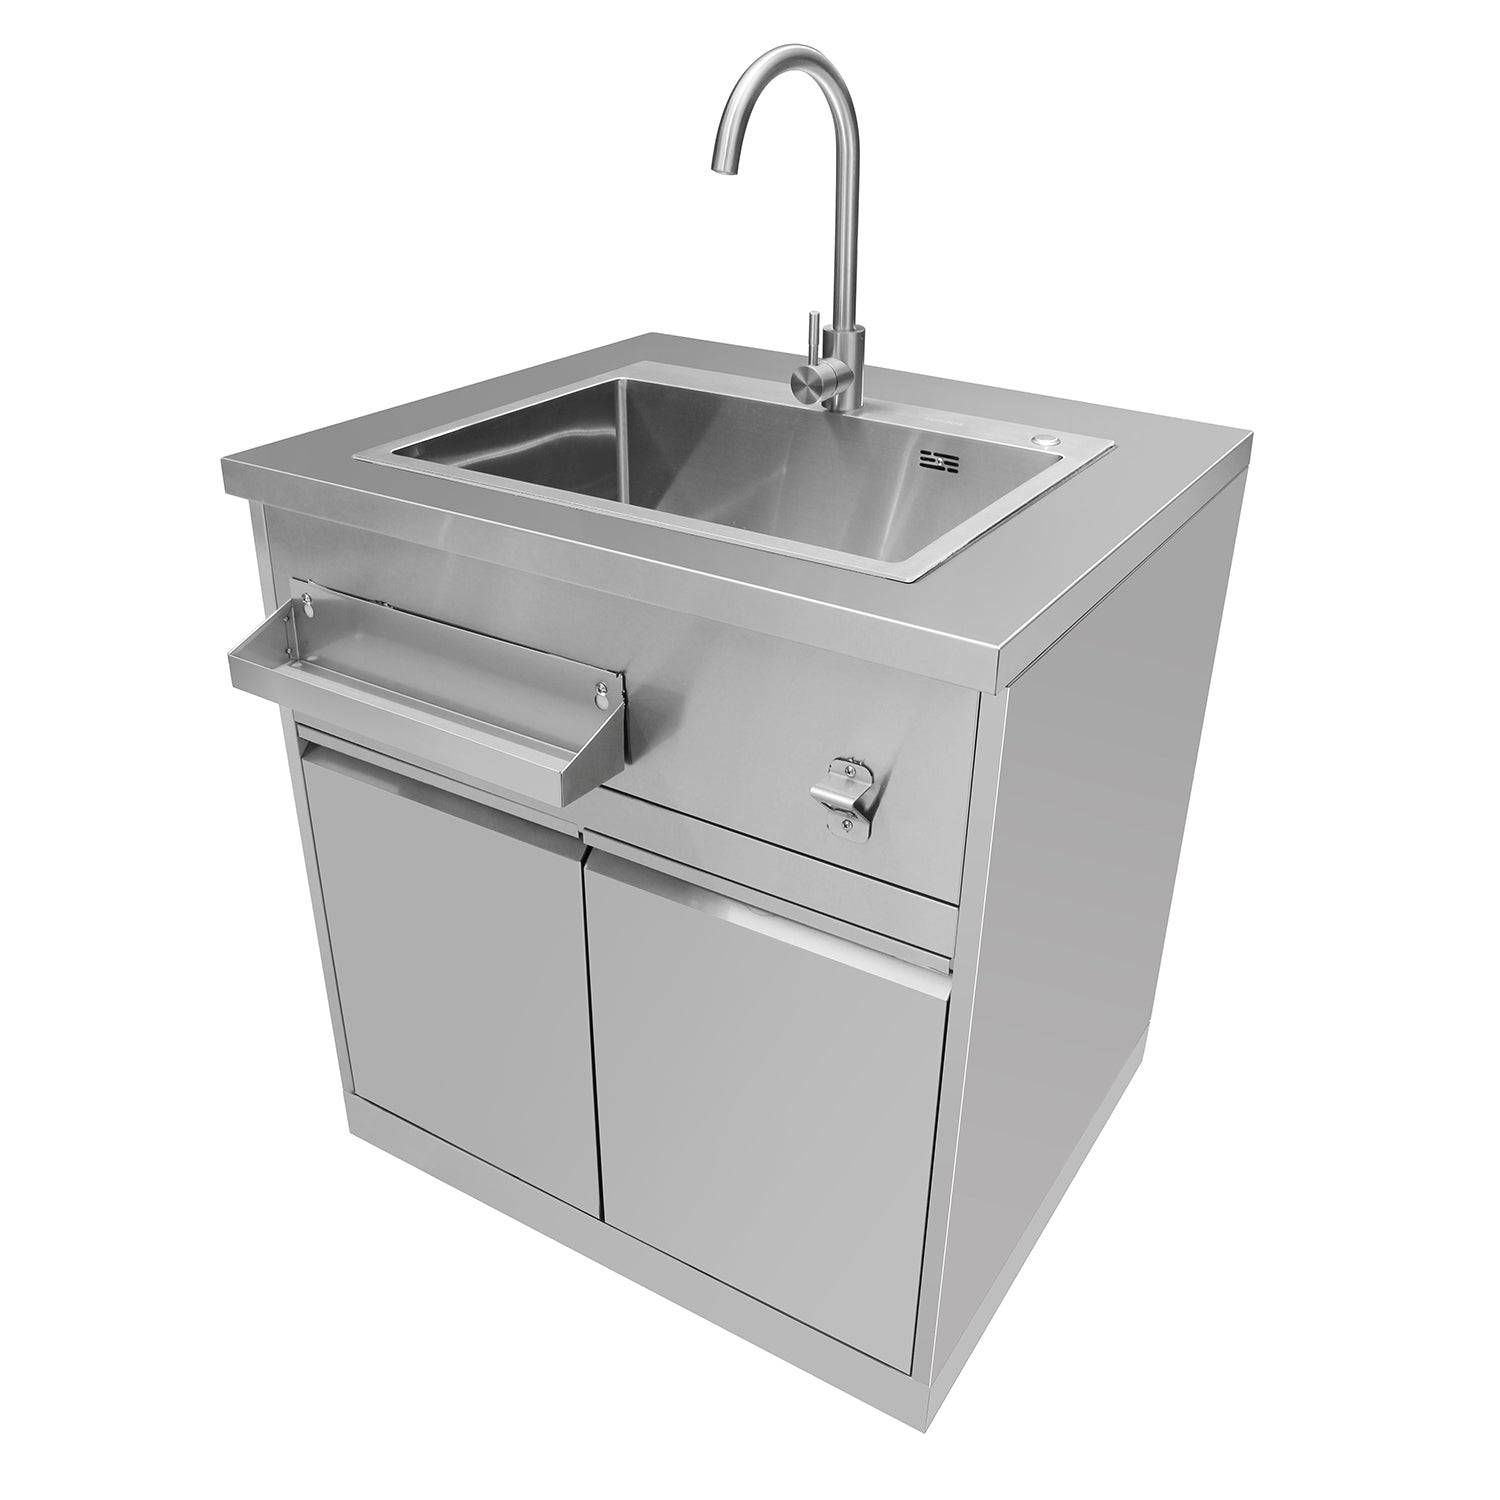 Fobest Stainless Steel Outdoor Kitchen Sink Cabinet with Storage Tray